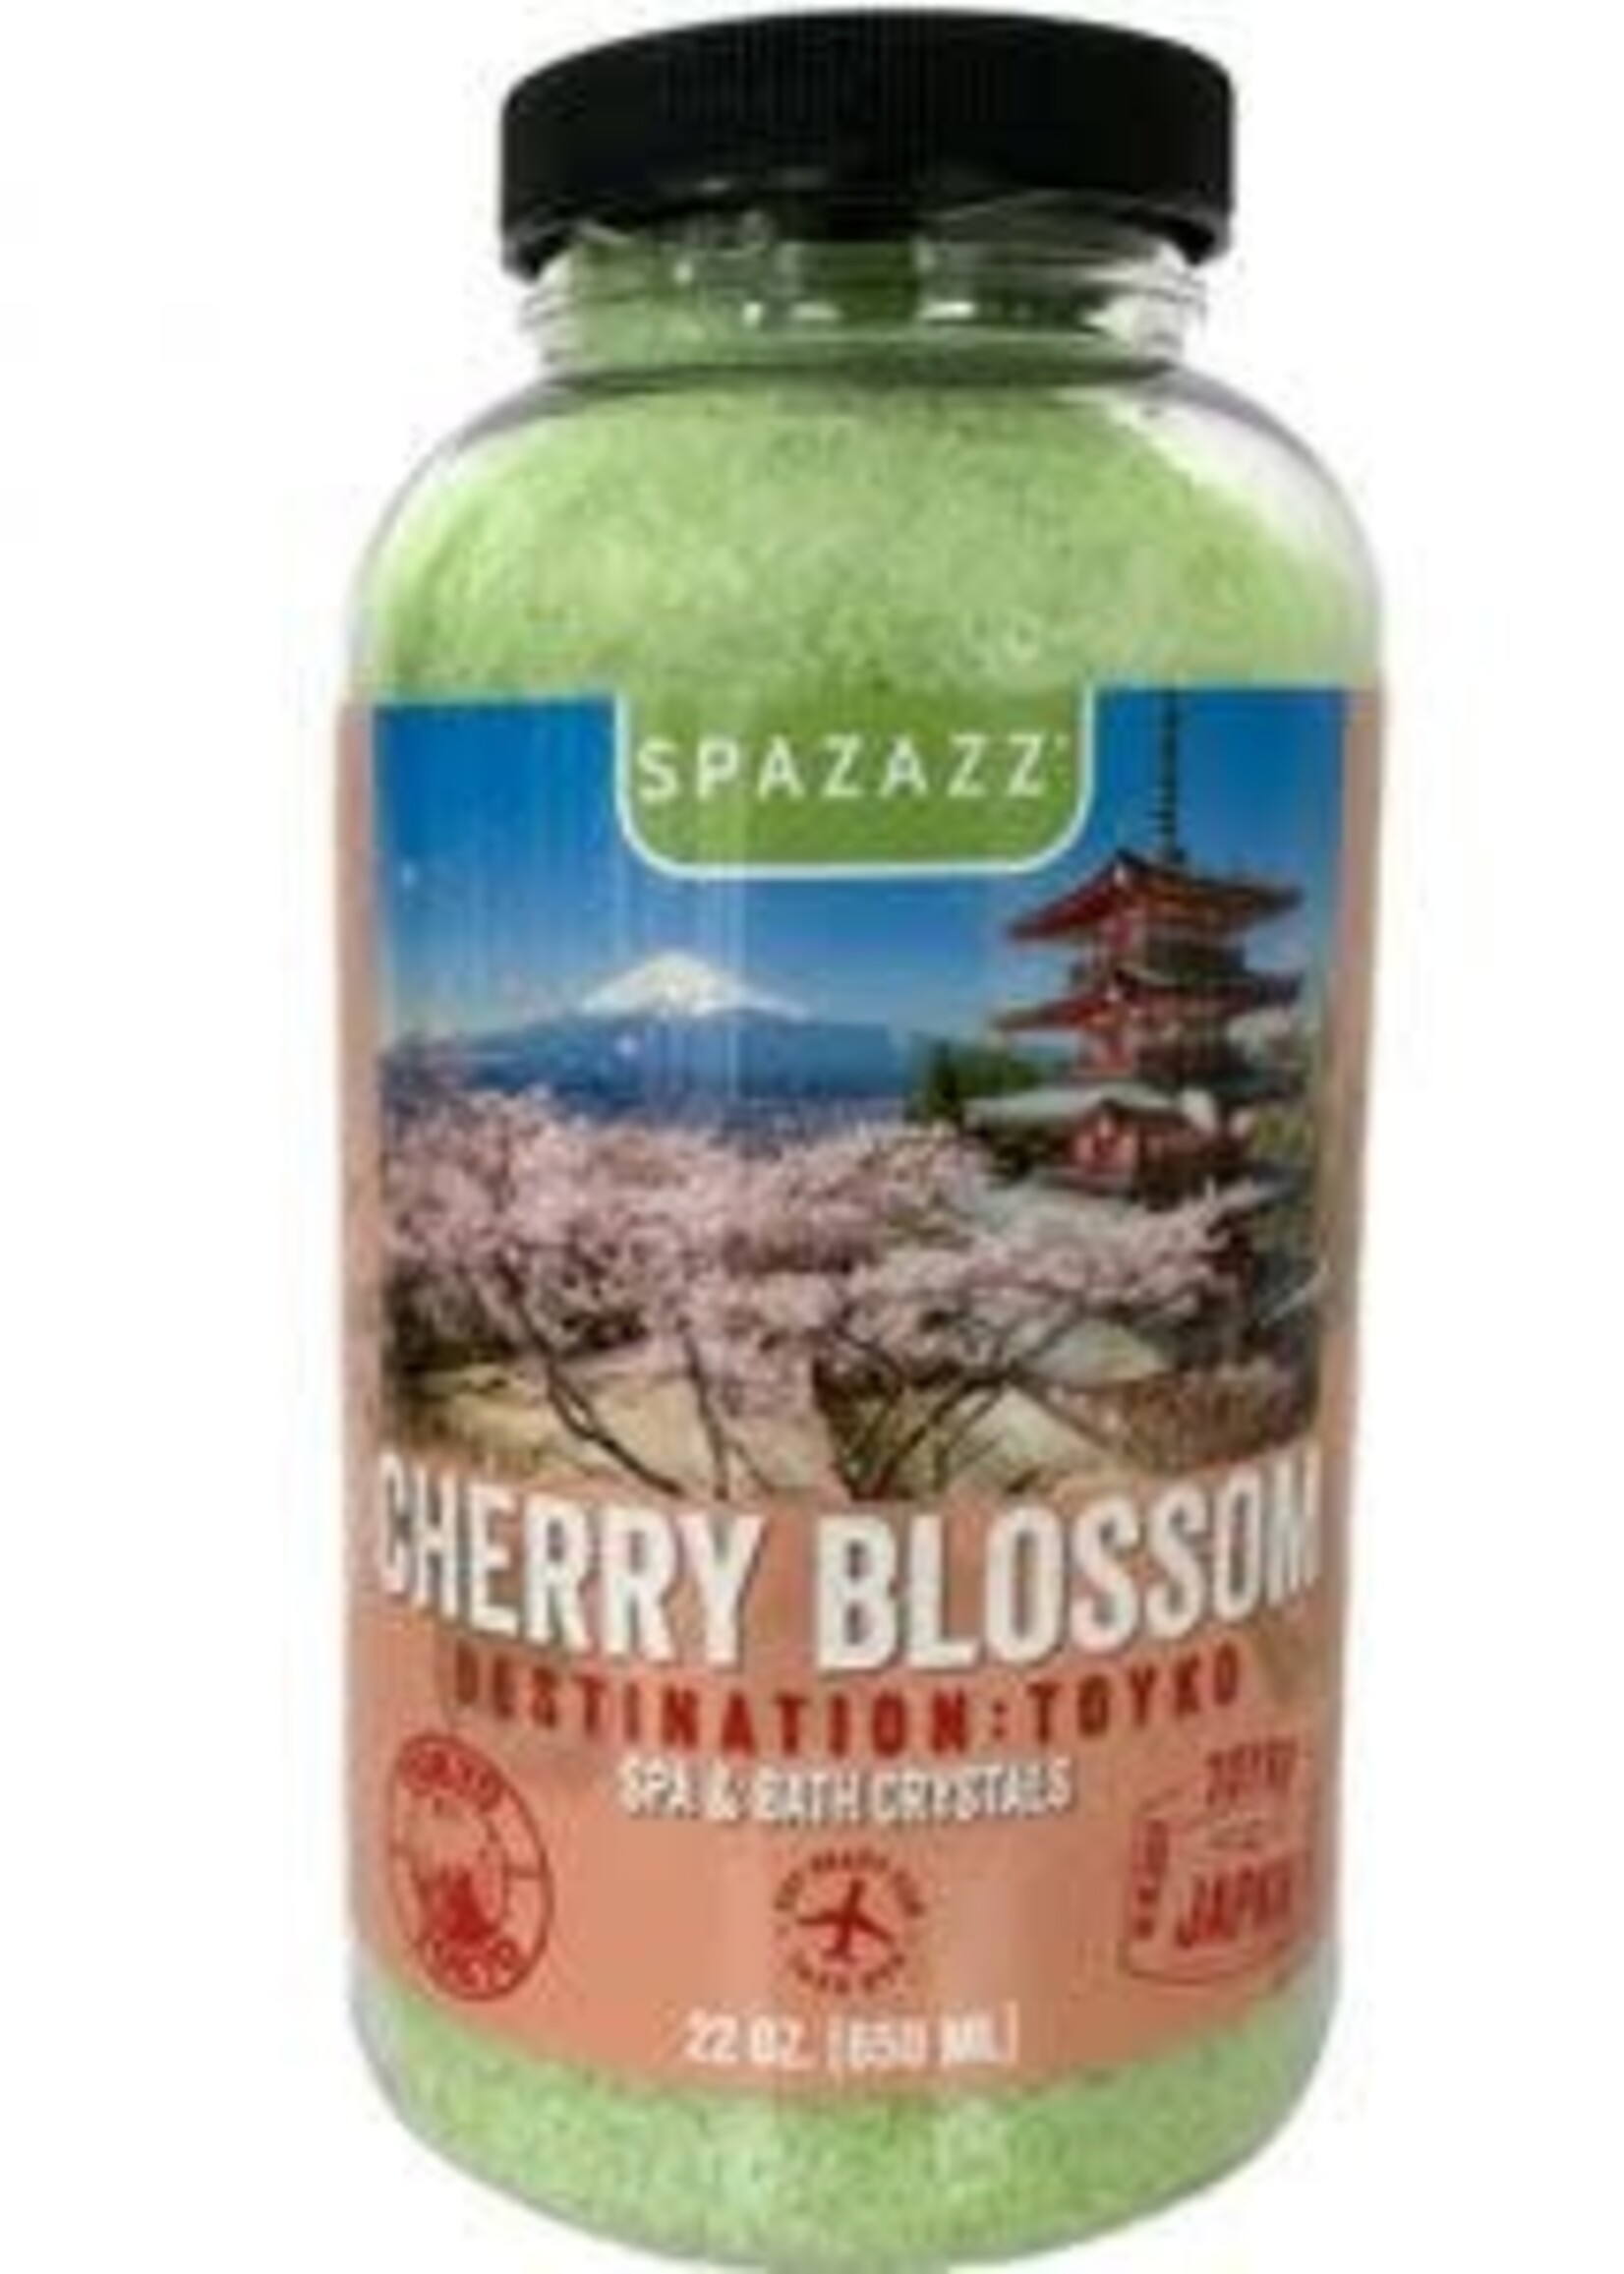 Spazazz Spazazz Destination Japan Cherry Blossom 22 Oz